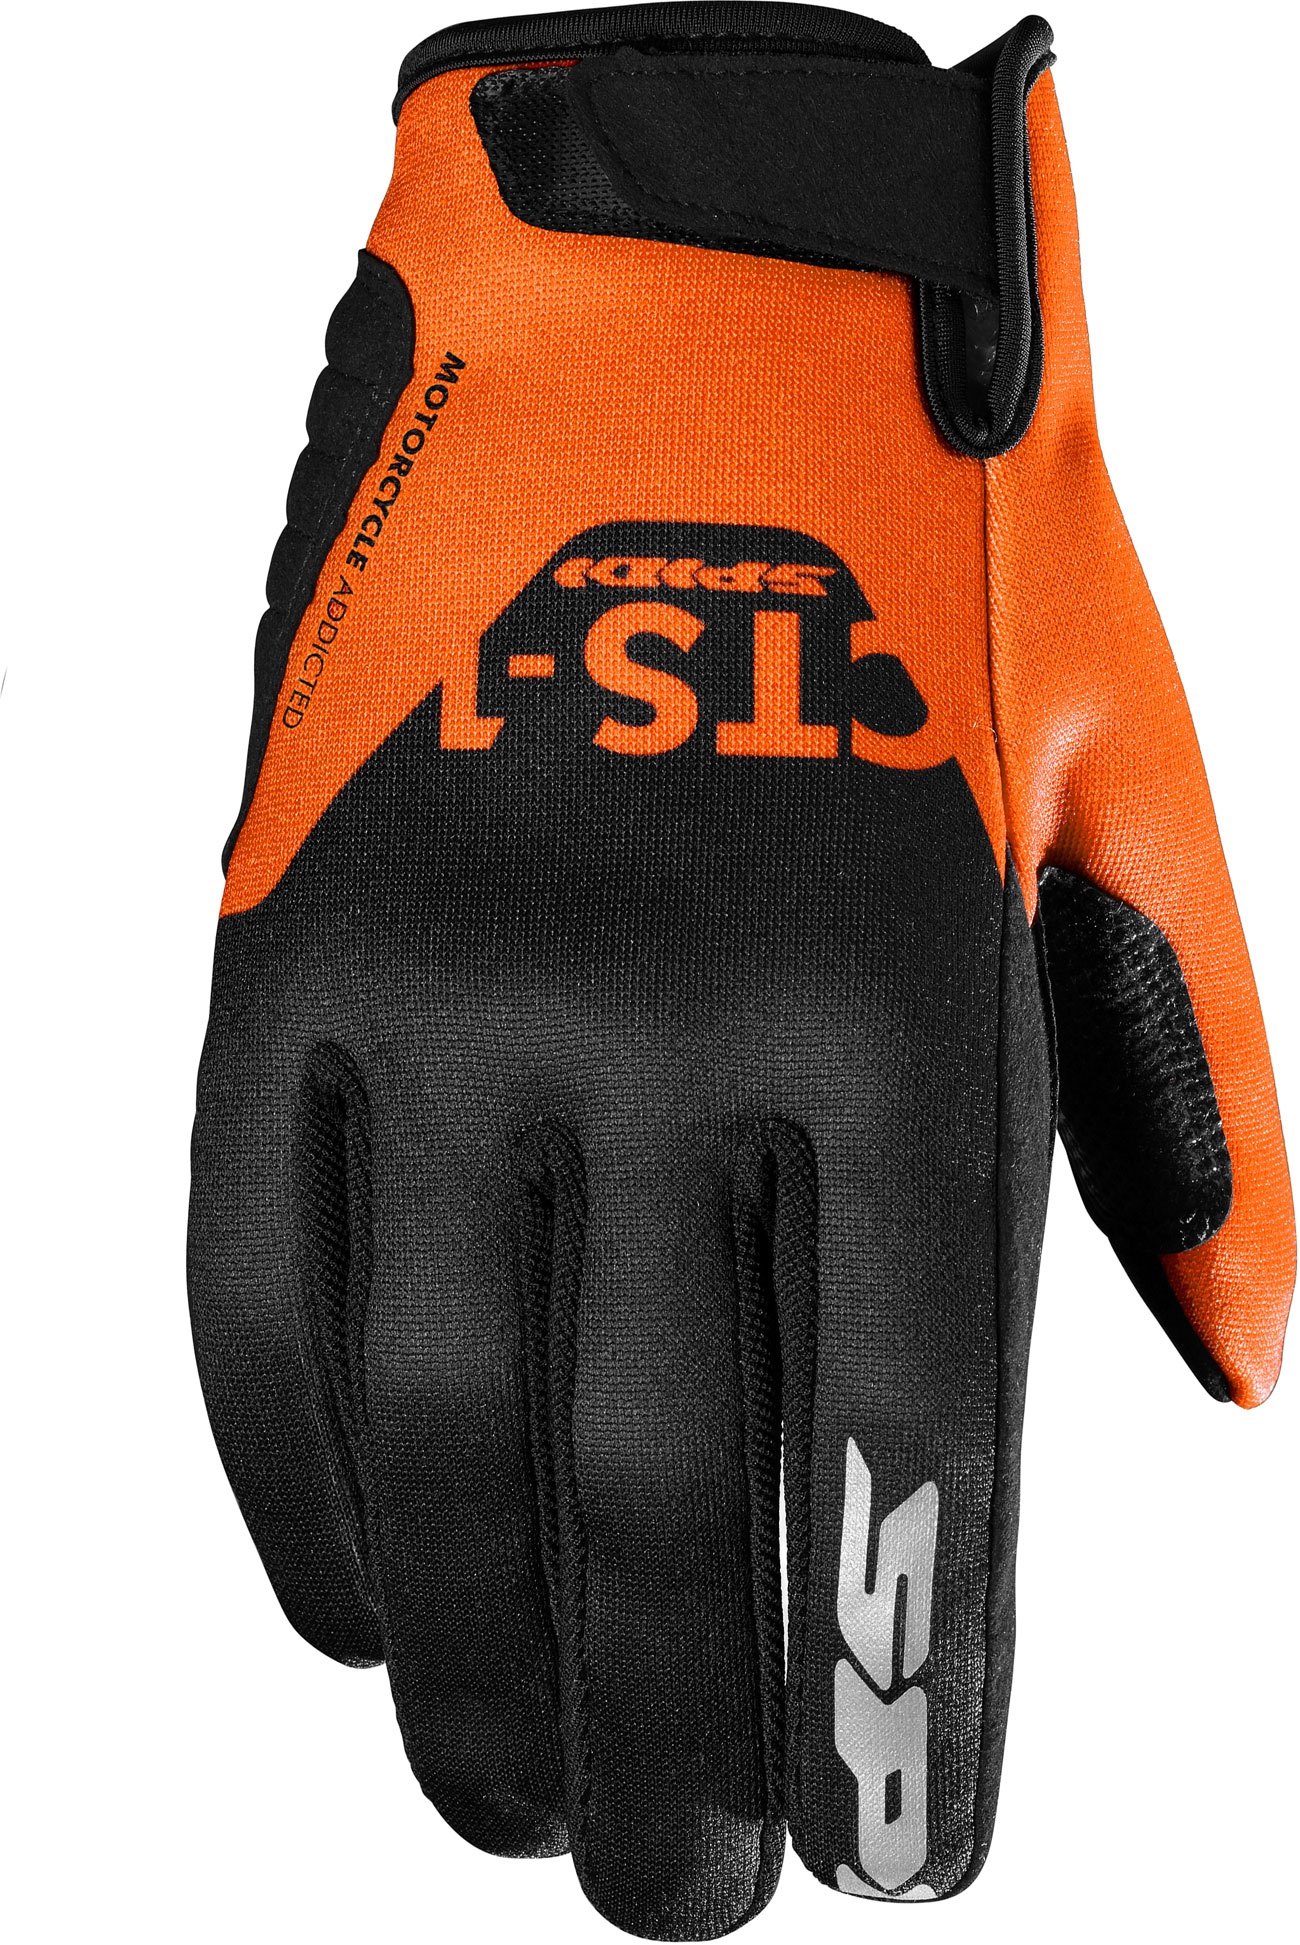 Spidi CTS-1, gants - Noir/Orange - S